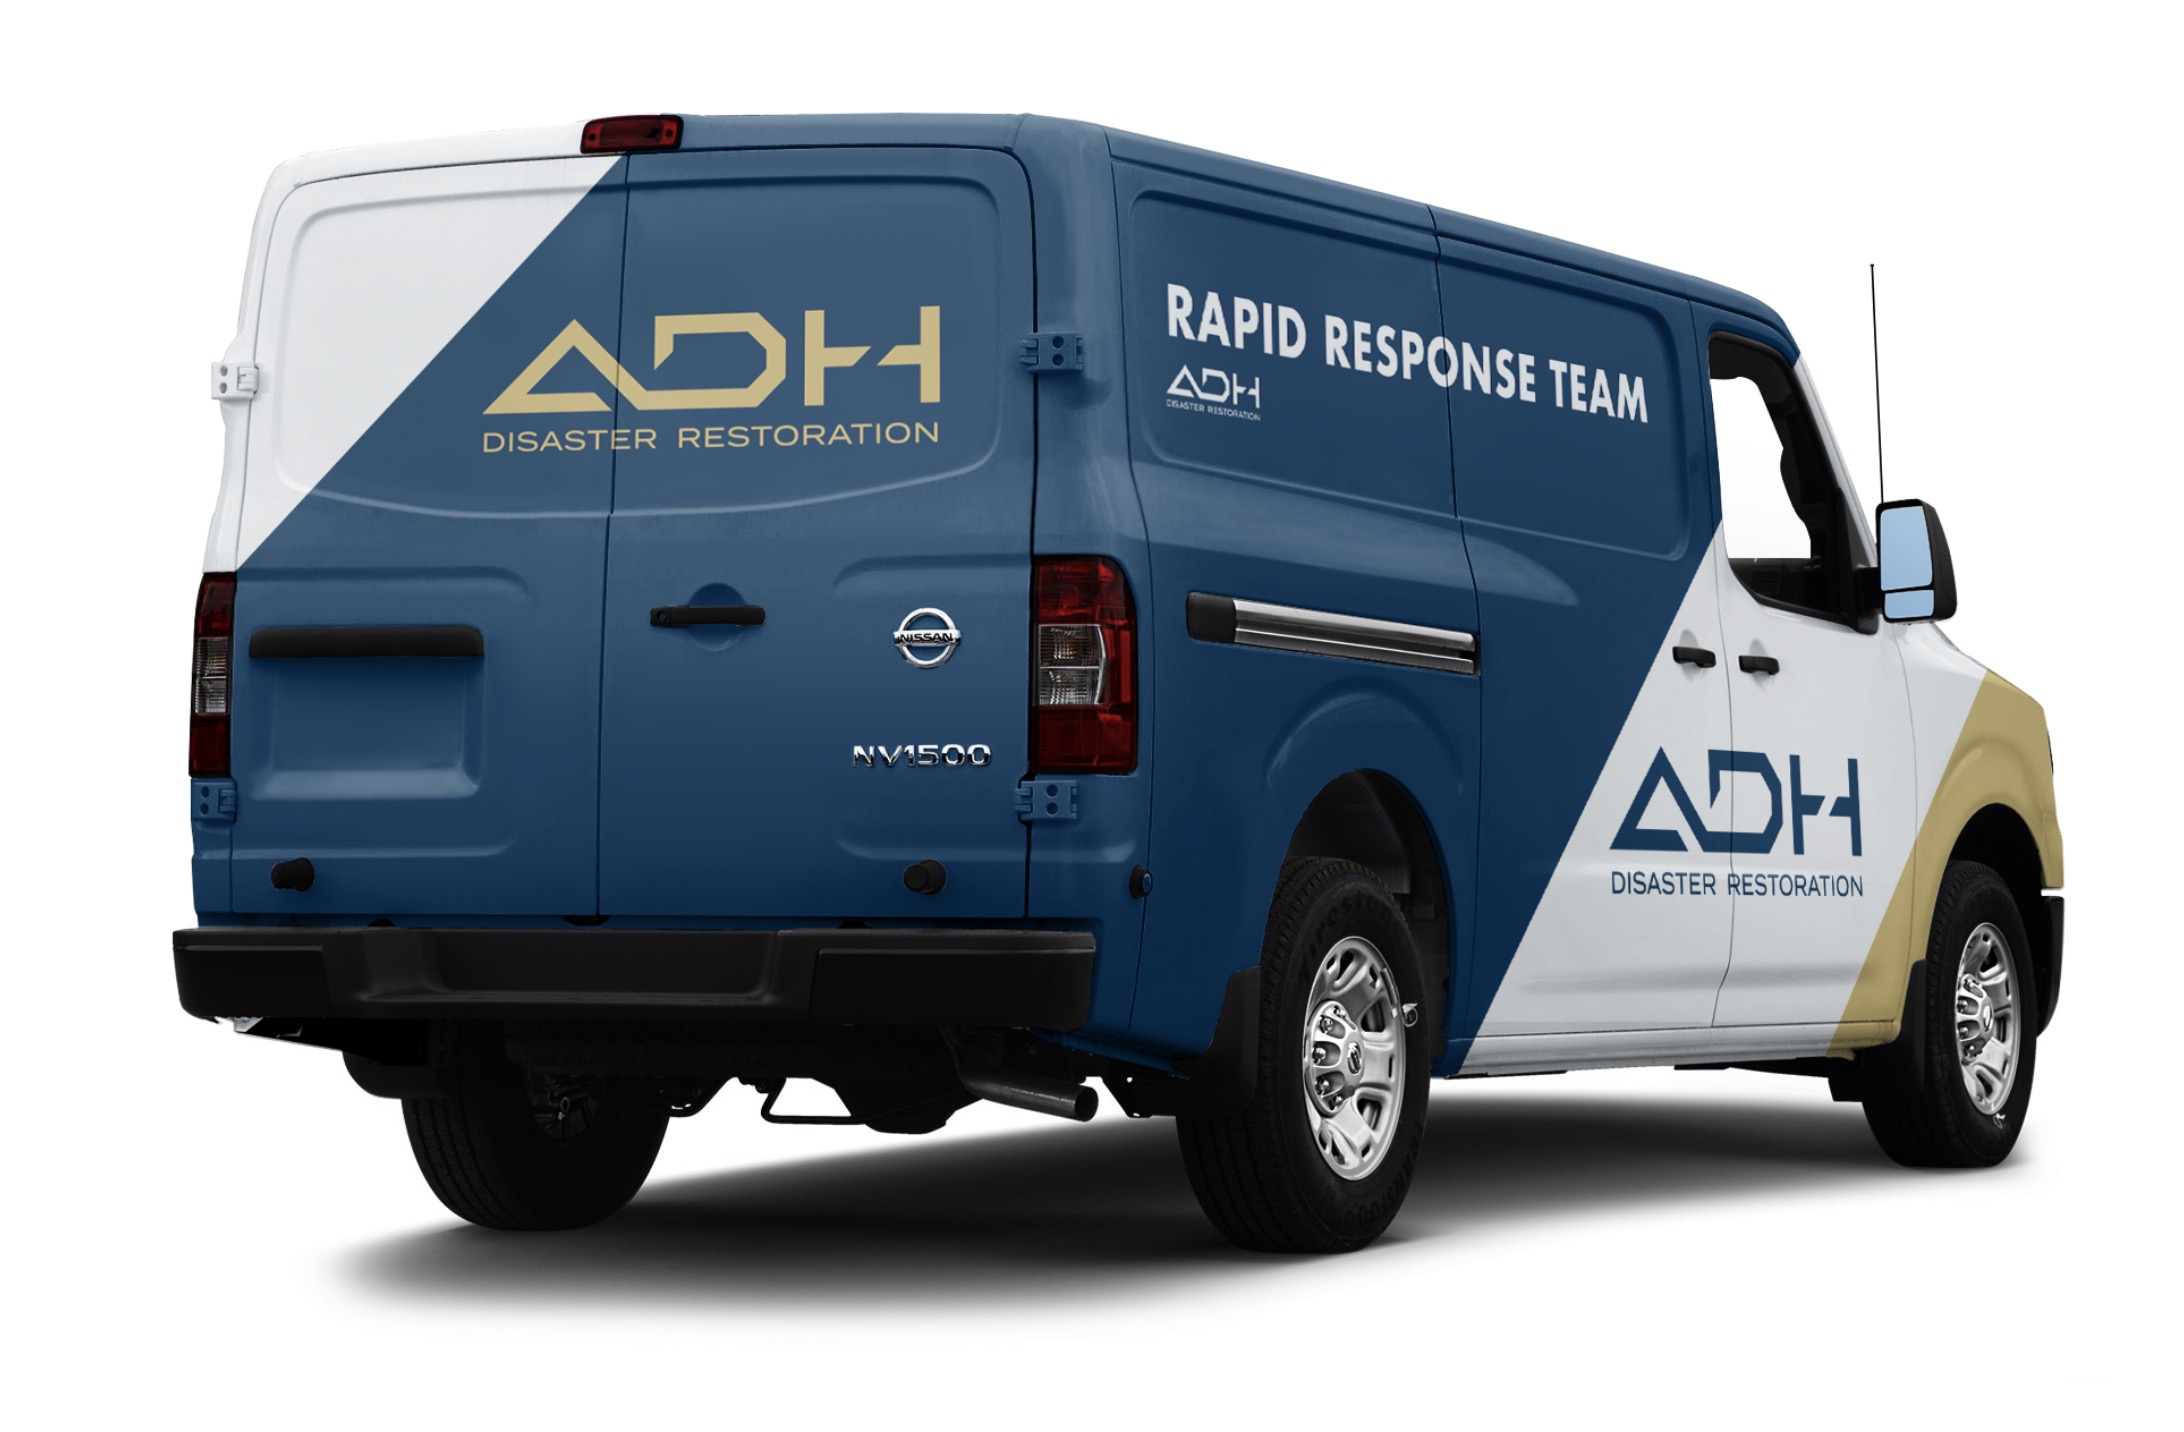 The ADH rapid response team van